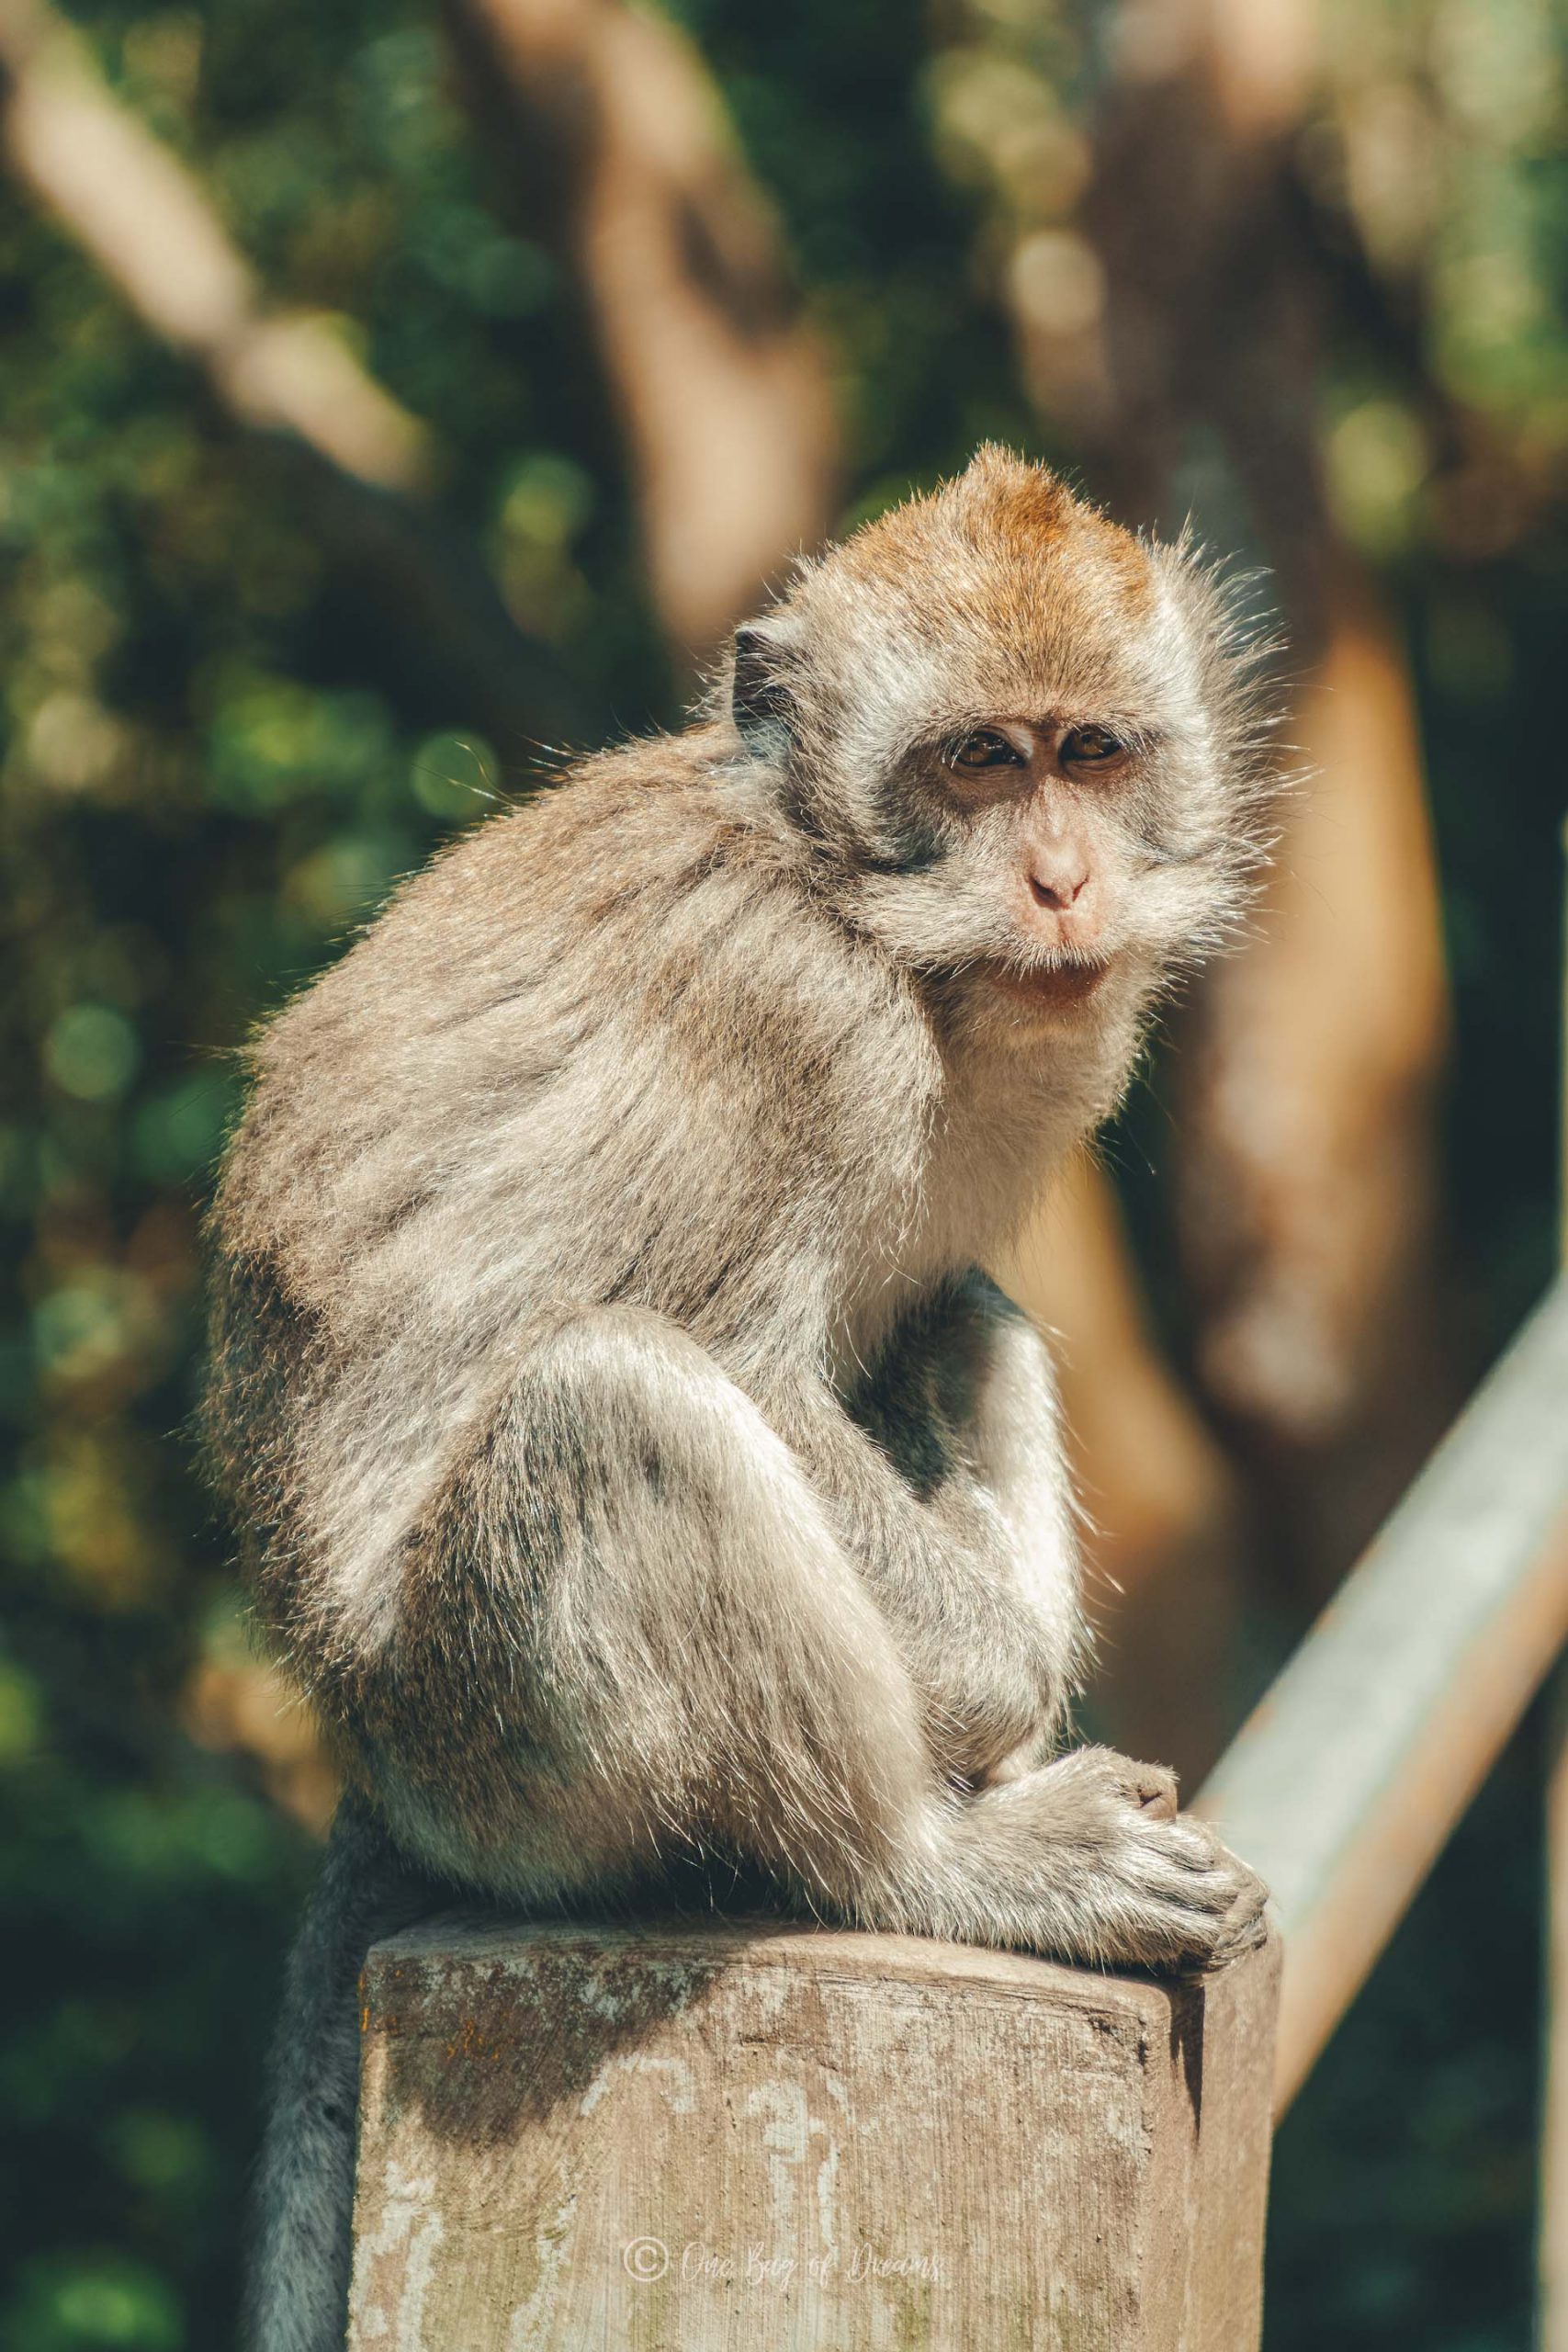 Monkey in the Monkey Forest in Ubud